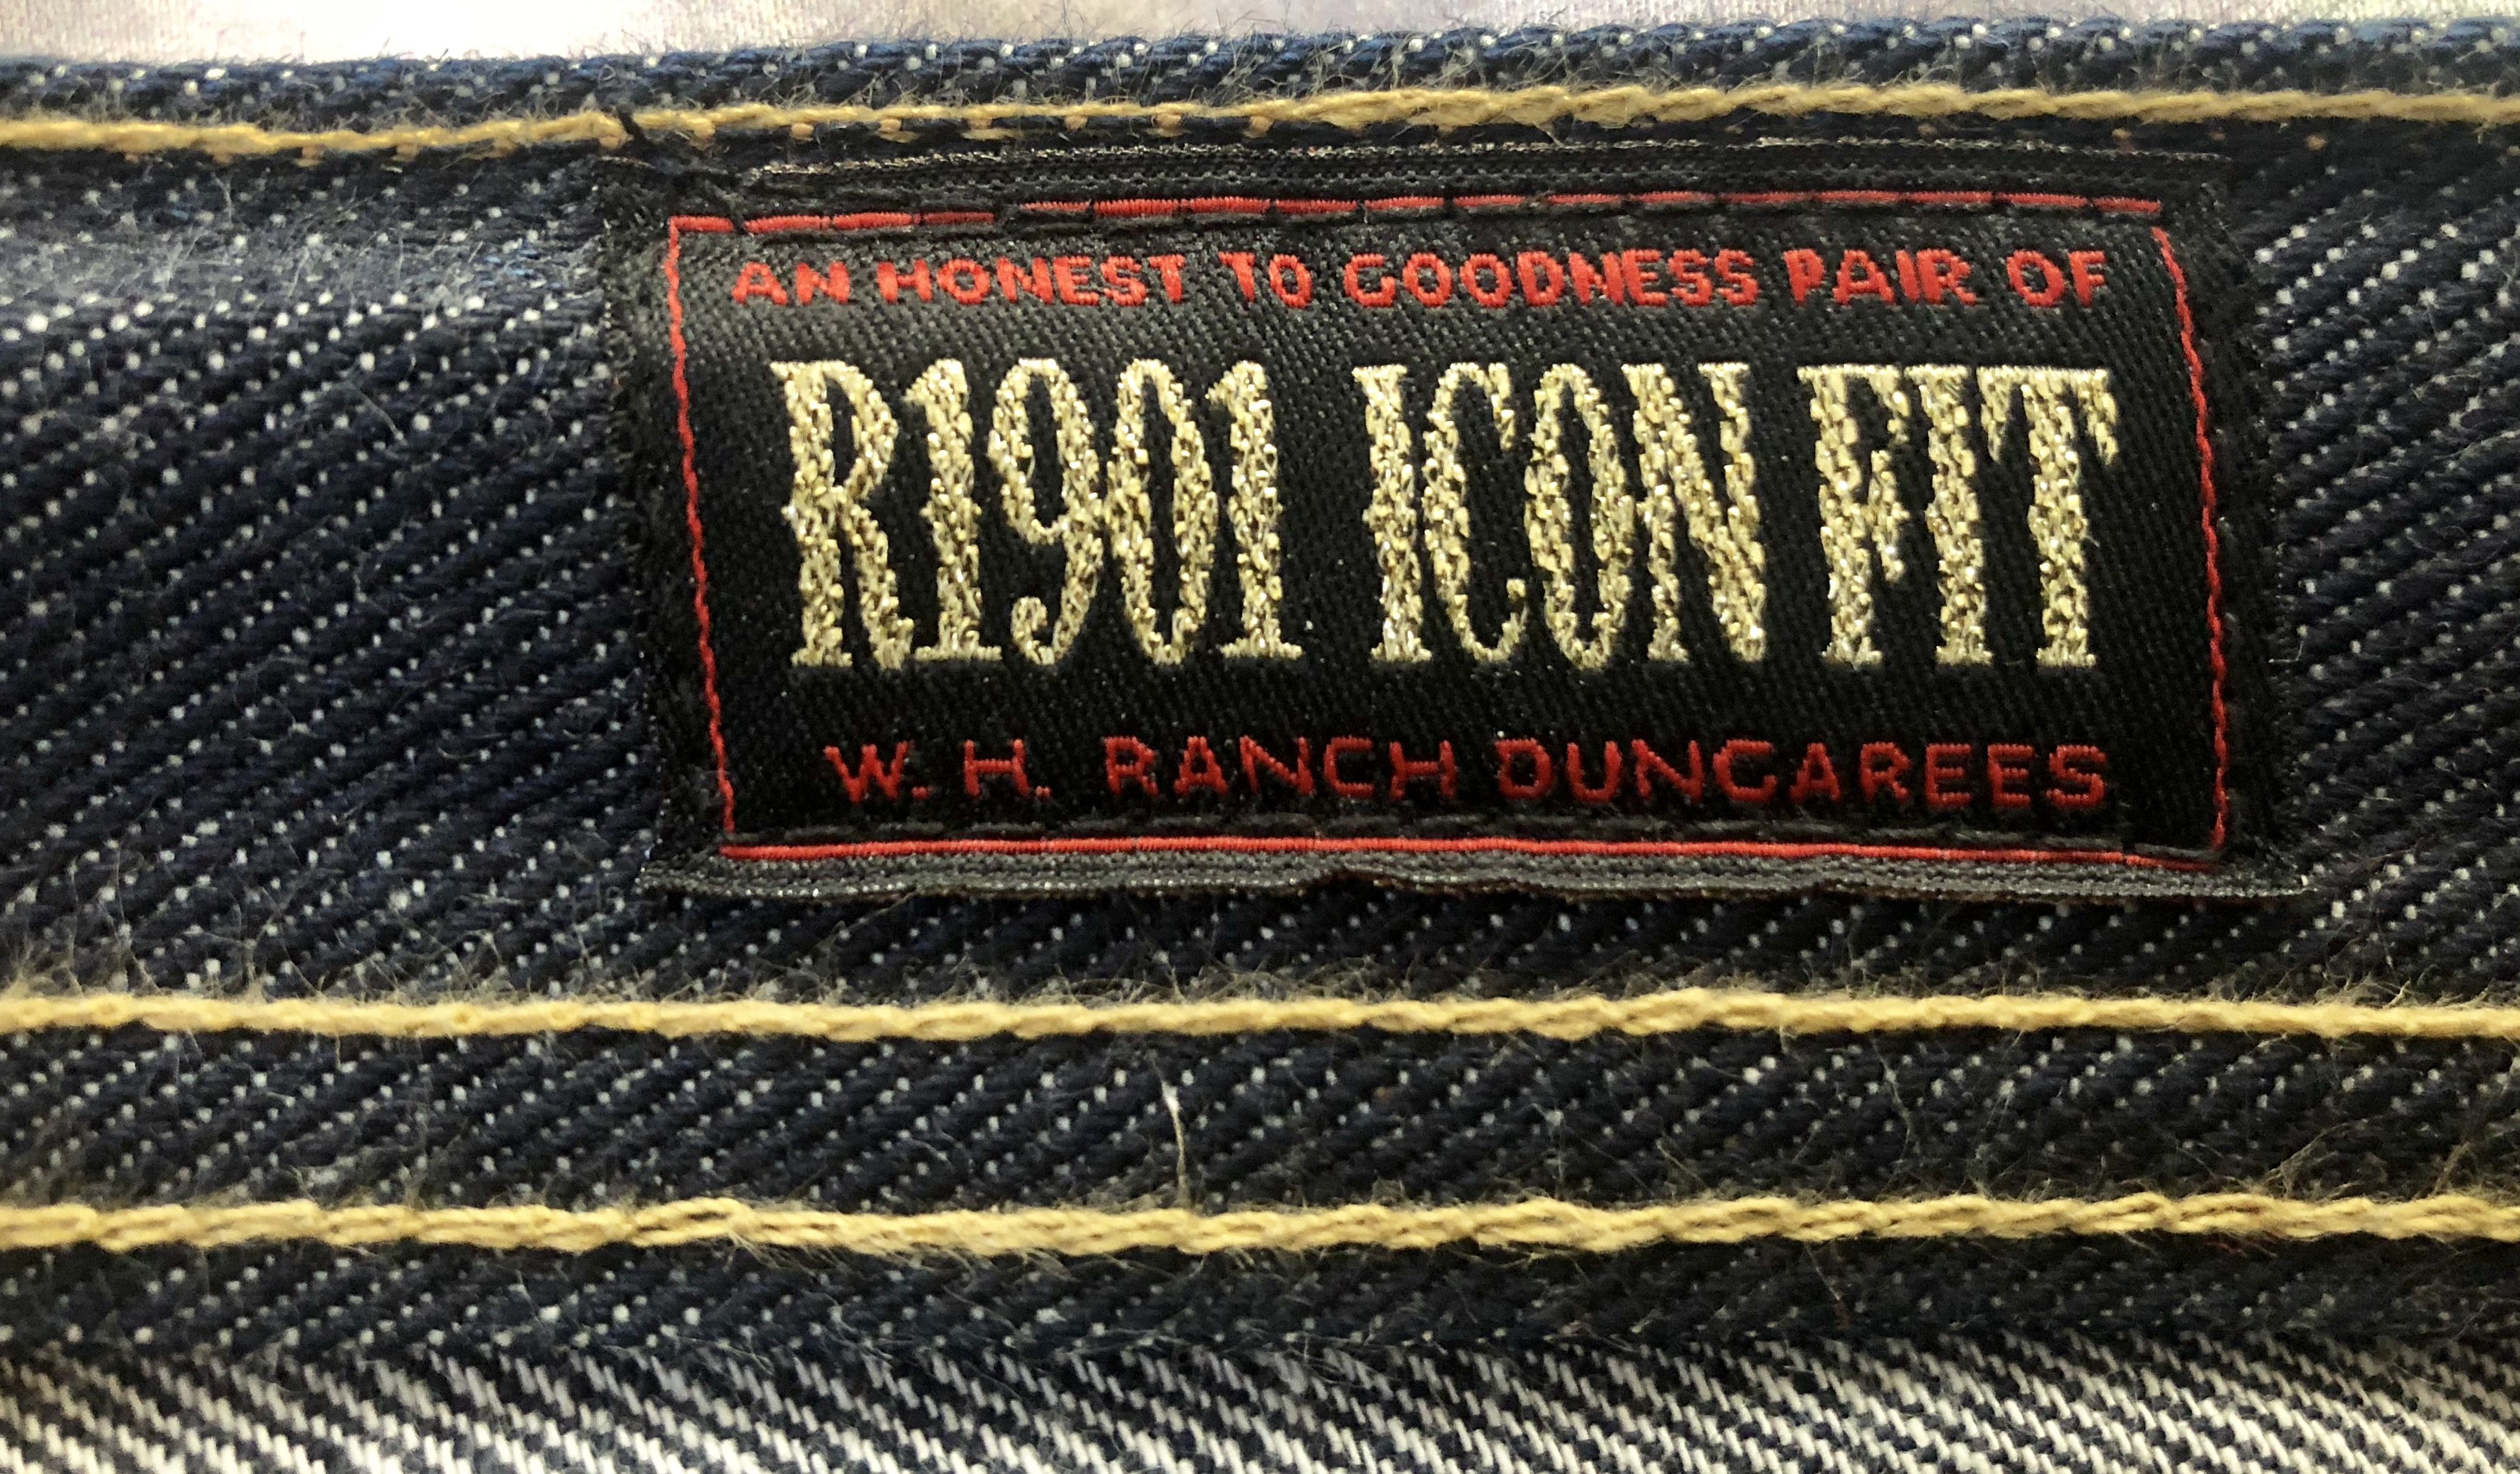 W.H. Ranch R1901 Ryder Jeans Size US 35 - 5 Thumbnail